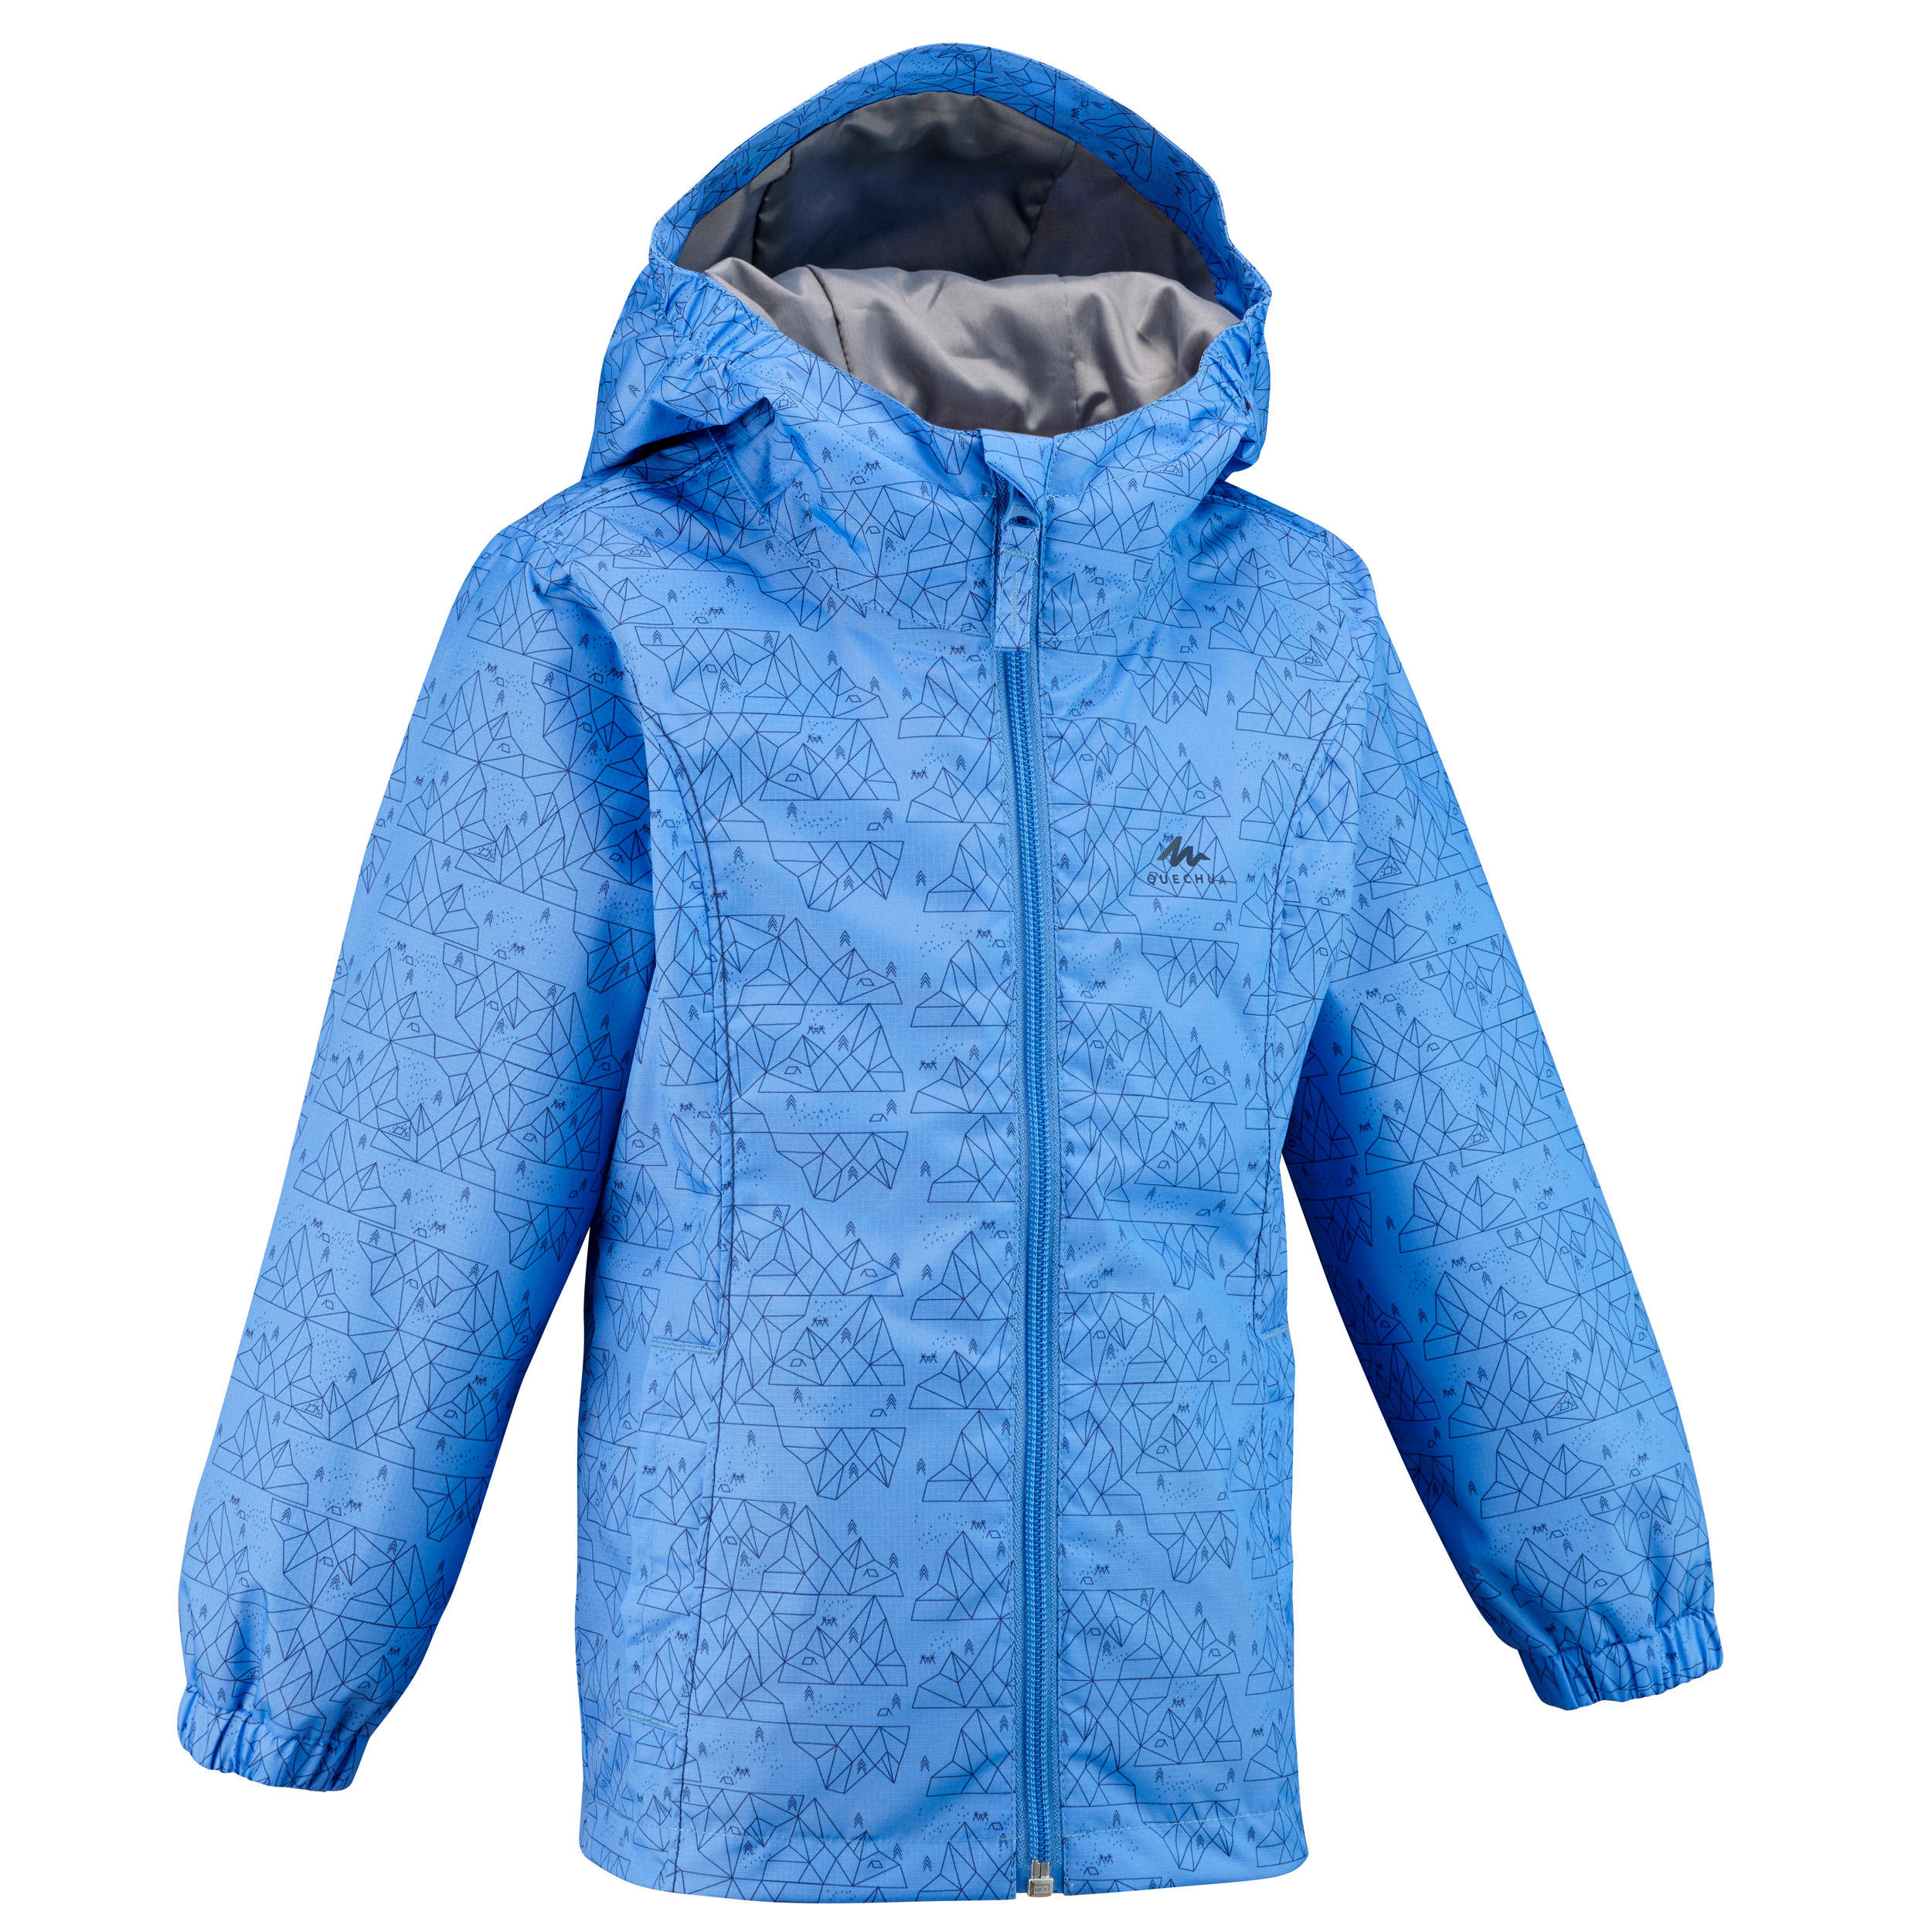 Jachetă Impermabilă Drumeție la munte MH500 Albastru Copii 2-6 ani decathlon.ro  Imbracaminte trekking si drumetie